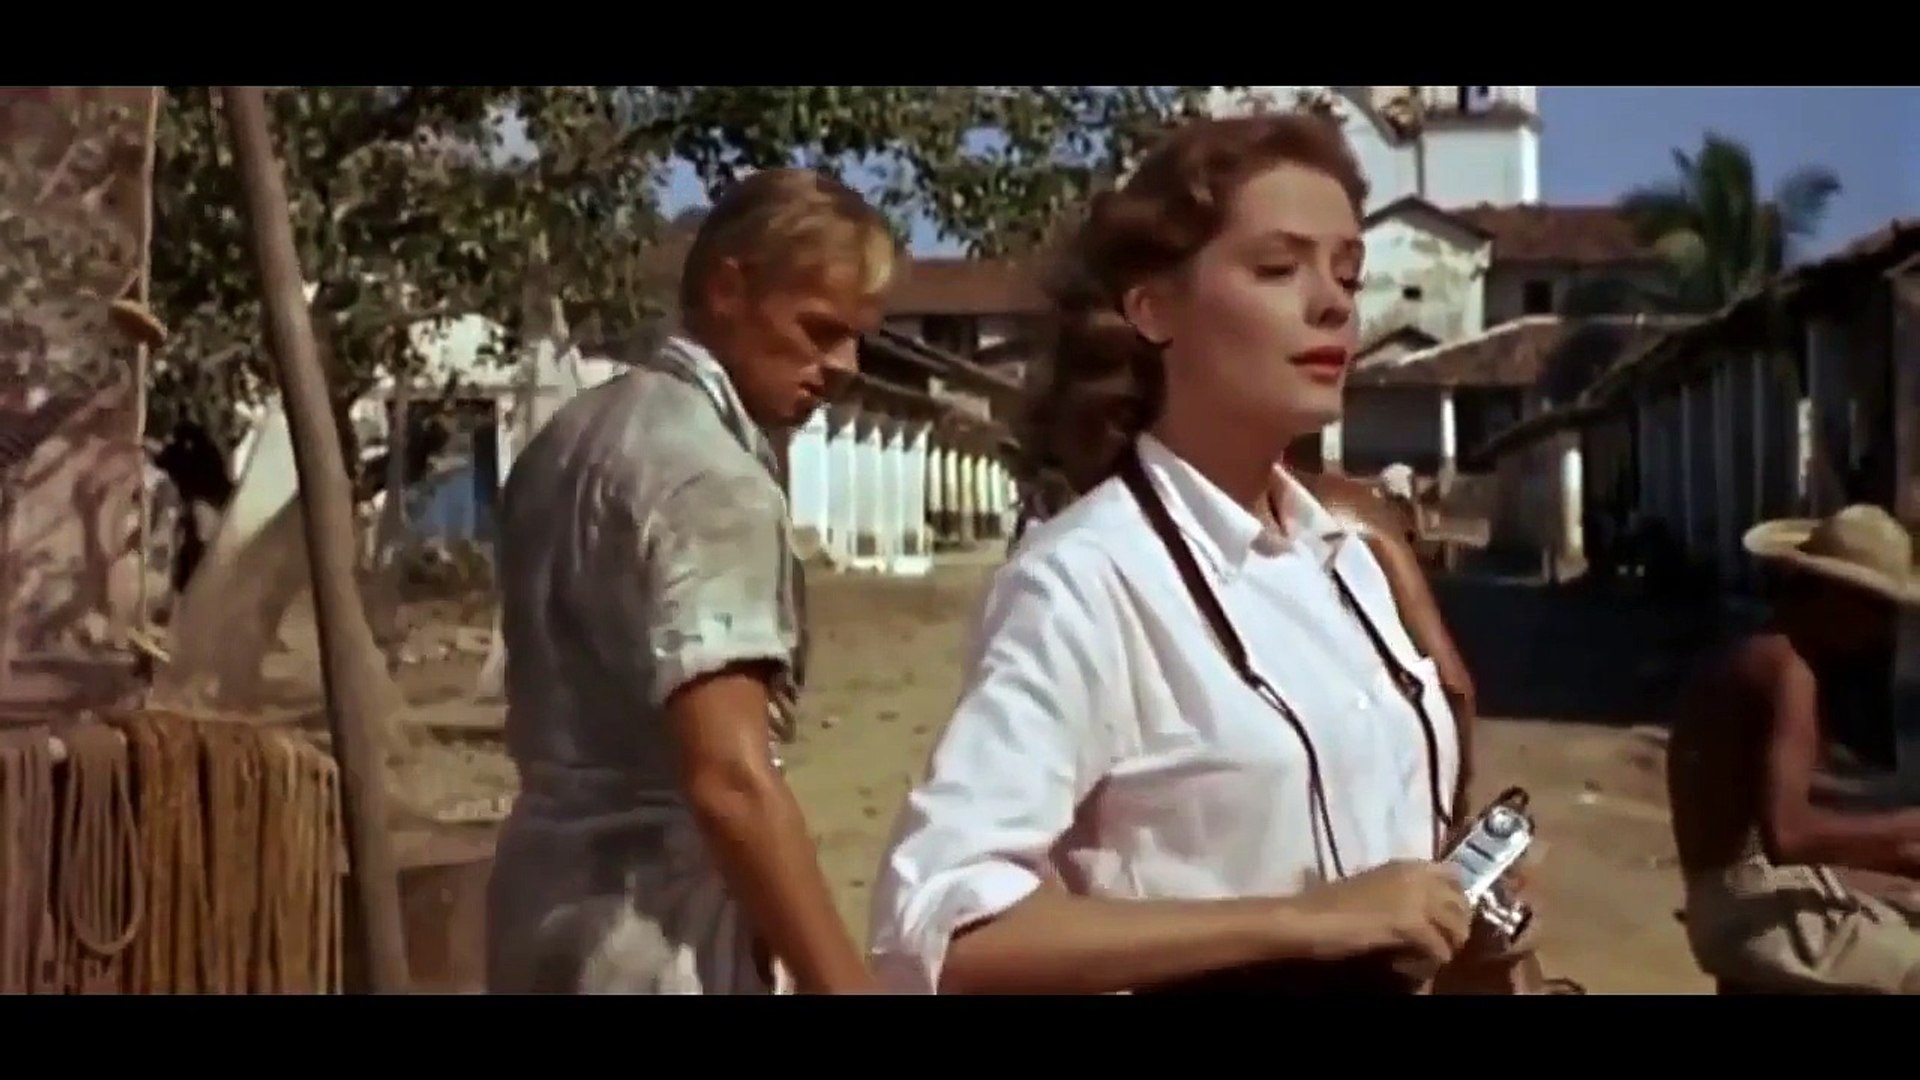 western movies full length - Western American - Run for the Sun (1956) Western  Movies Full Length - video Dailymotion